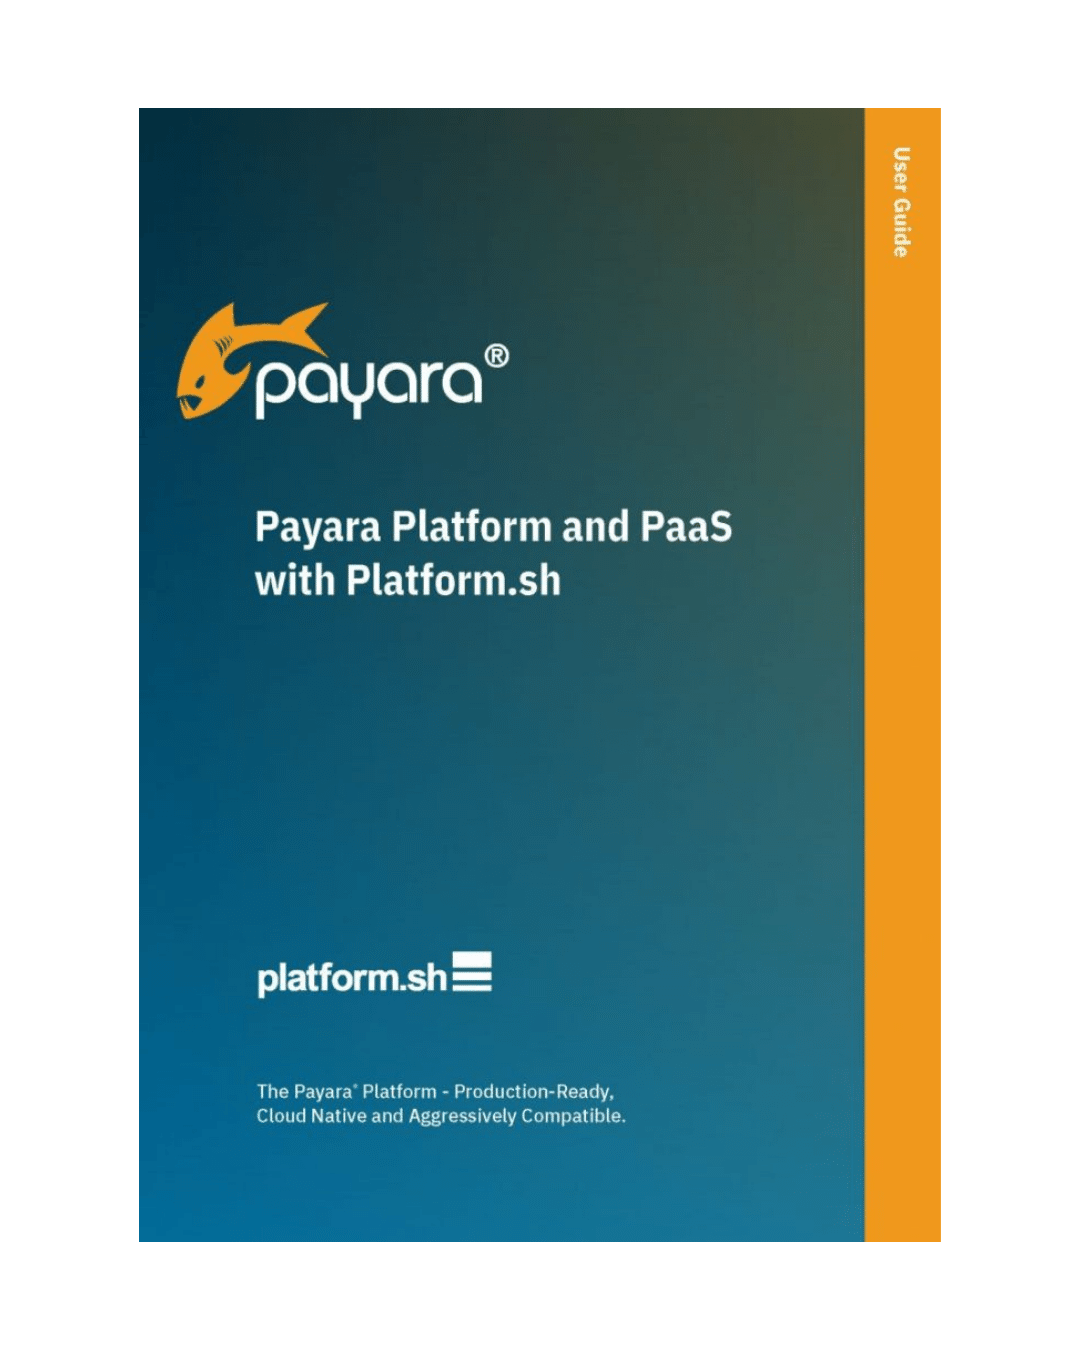 Payara Platform and PaaS with Platform.sh